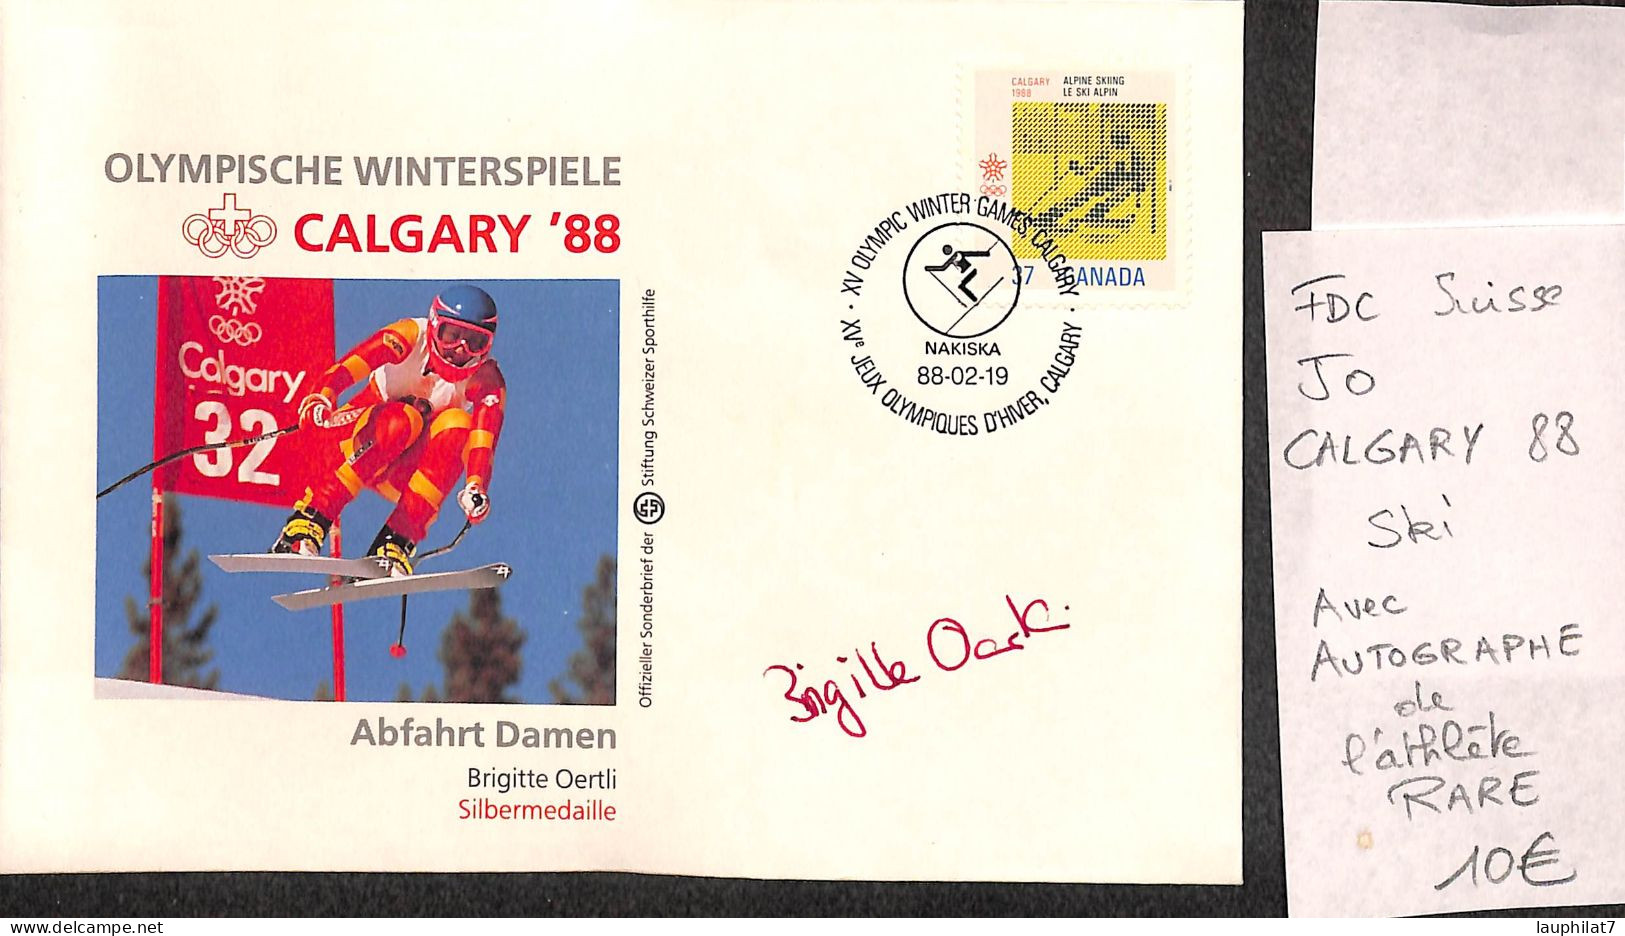 [900090]TB//-Suisse 1988 - FDC, Documents, Brigitte Oertli, Calgary, Avec Autographe De L'athlète, RARE, Jeux Olympique - Inverno1988: Calgary